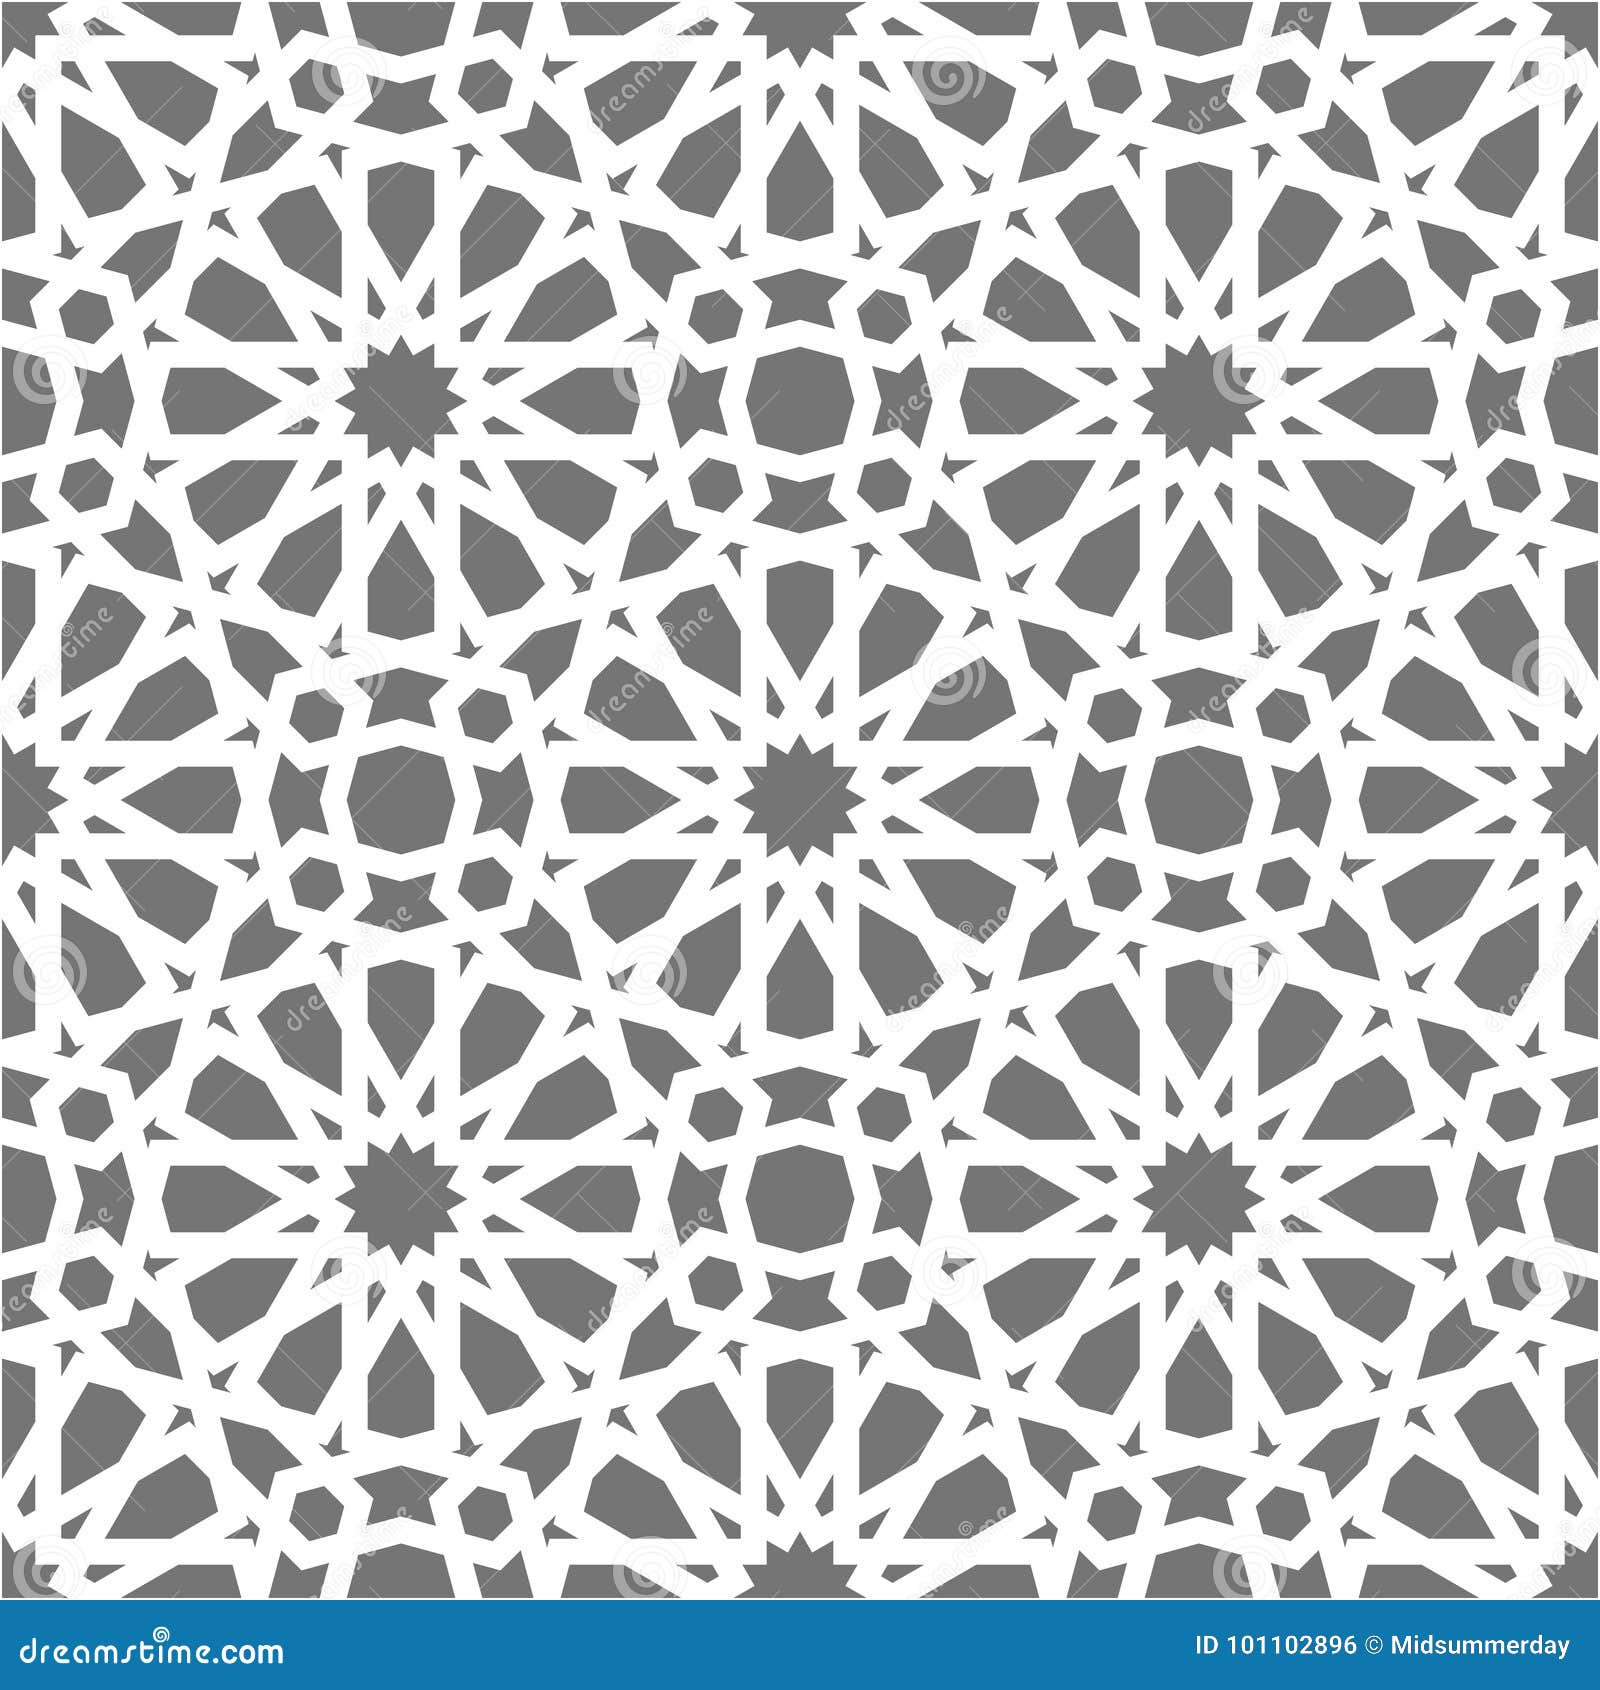 islamic seamless  pattern. white geometric ornaments based on traditional arabic art. oriental muslim mosaic